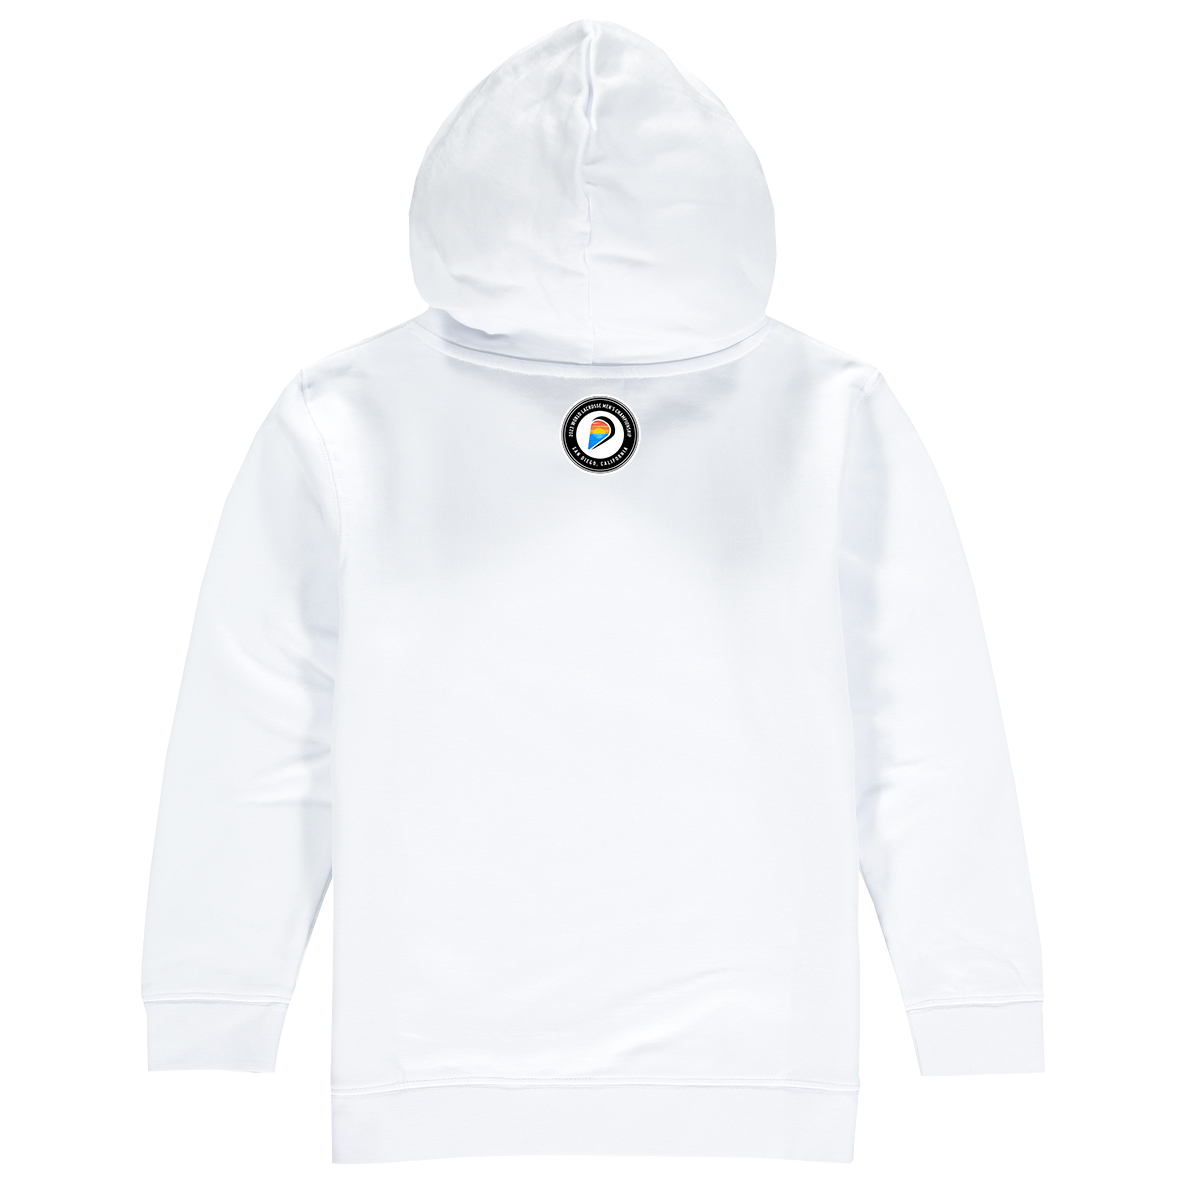 Philippines Premium Unisex Hoodie Sweatshirt White